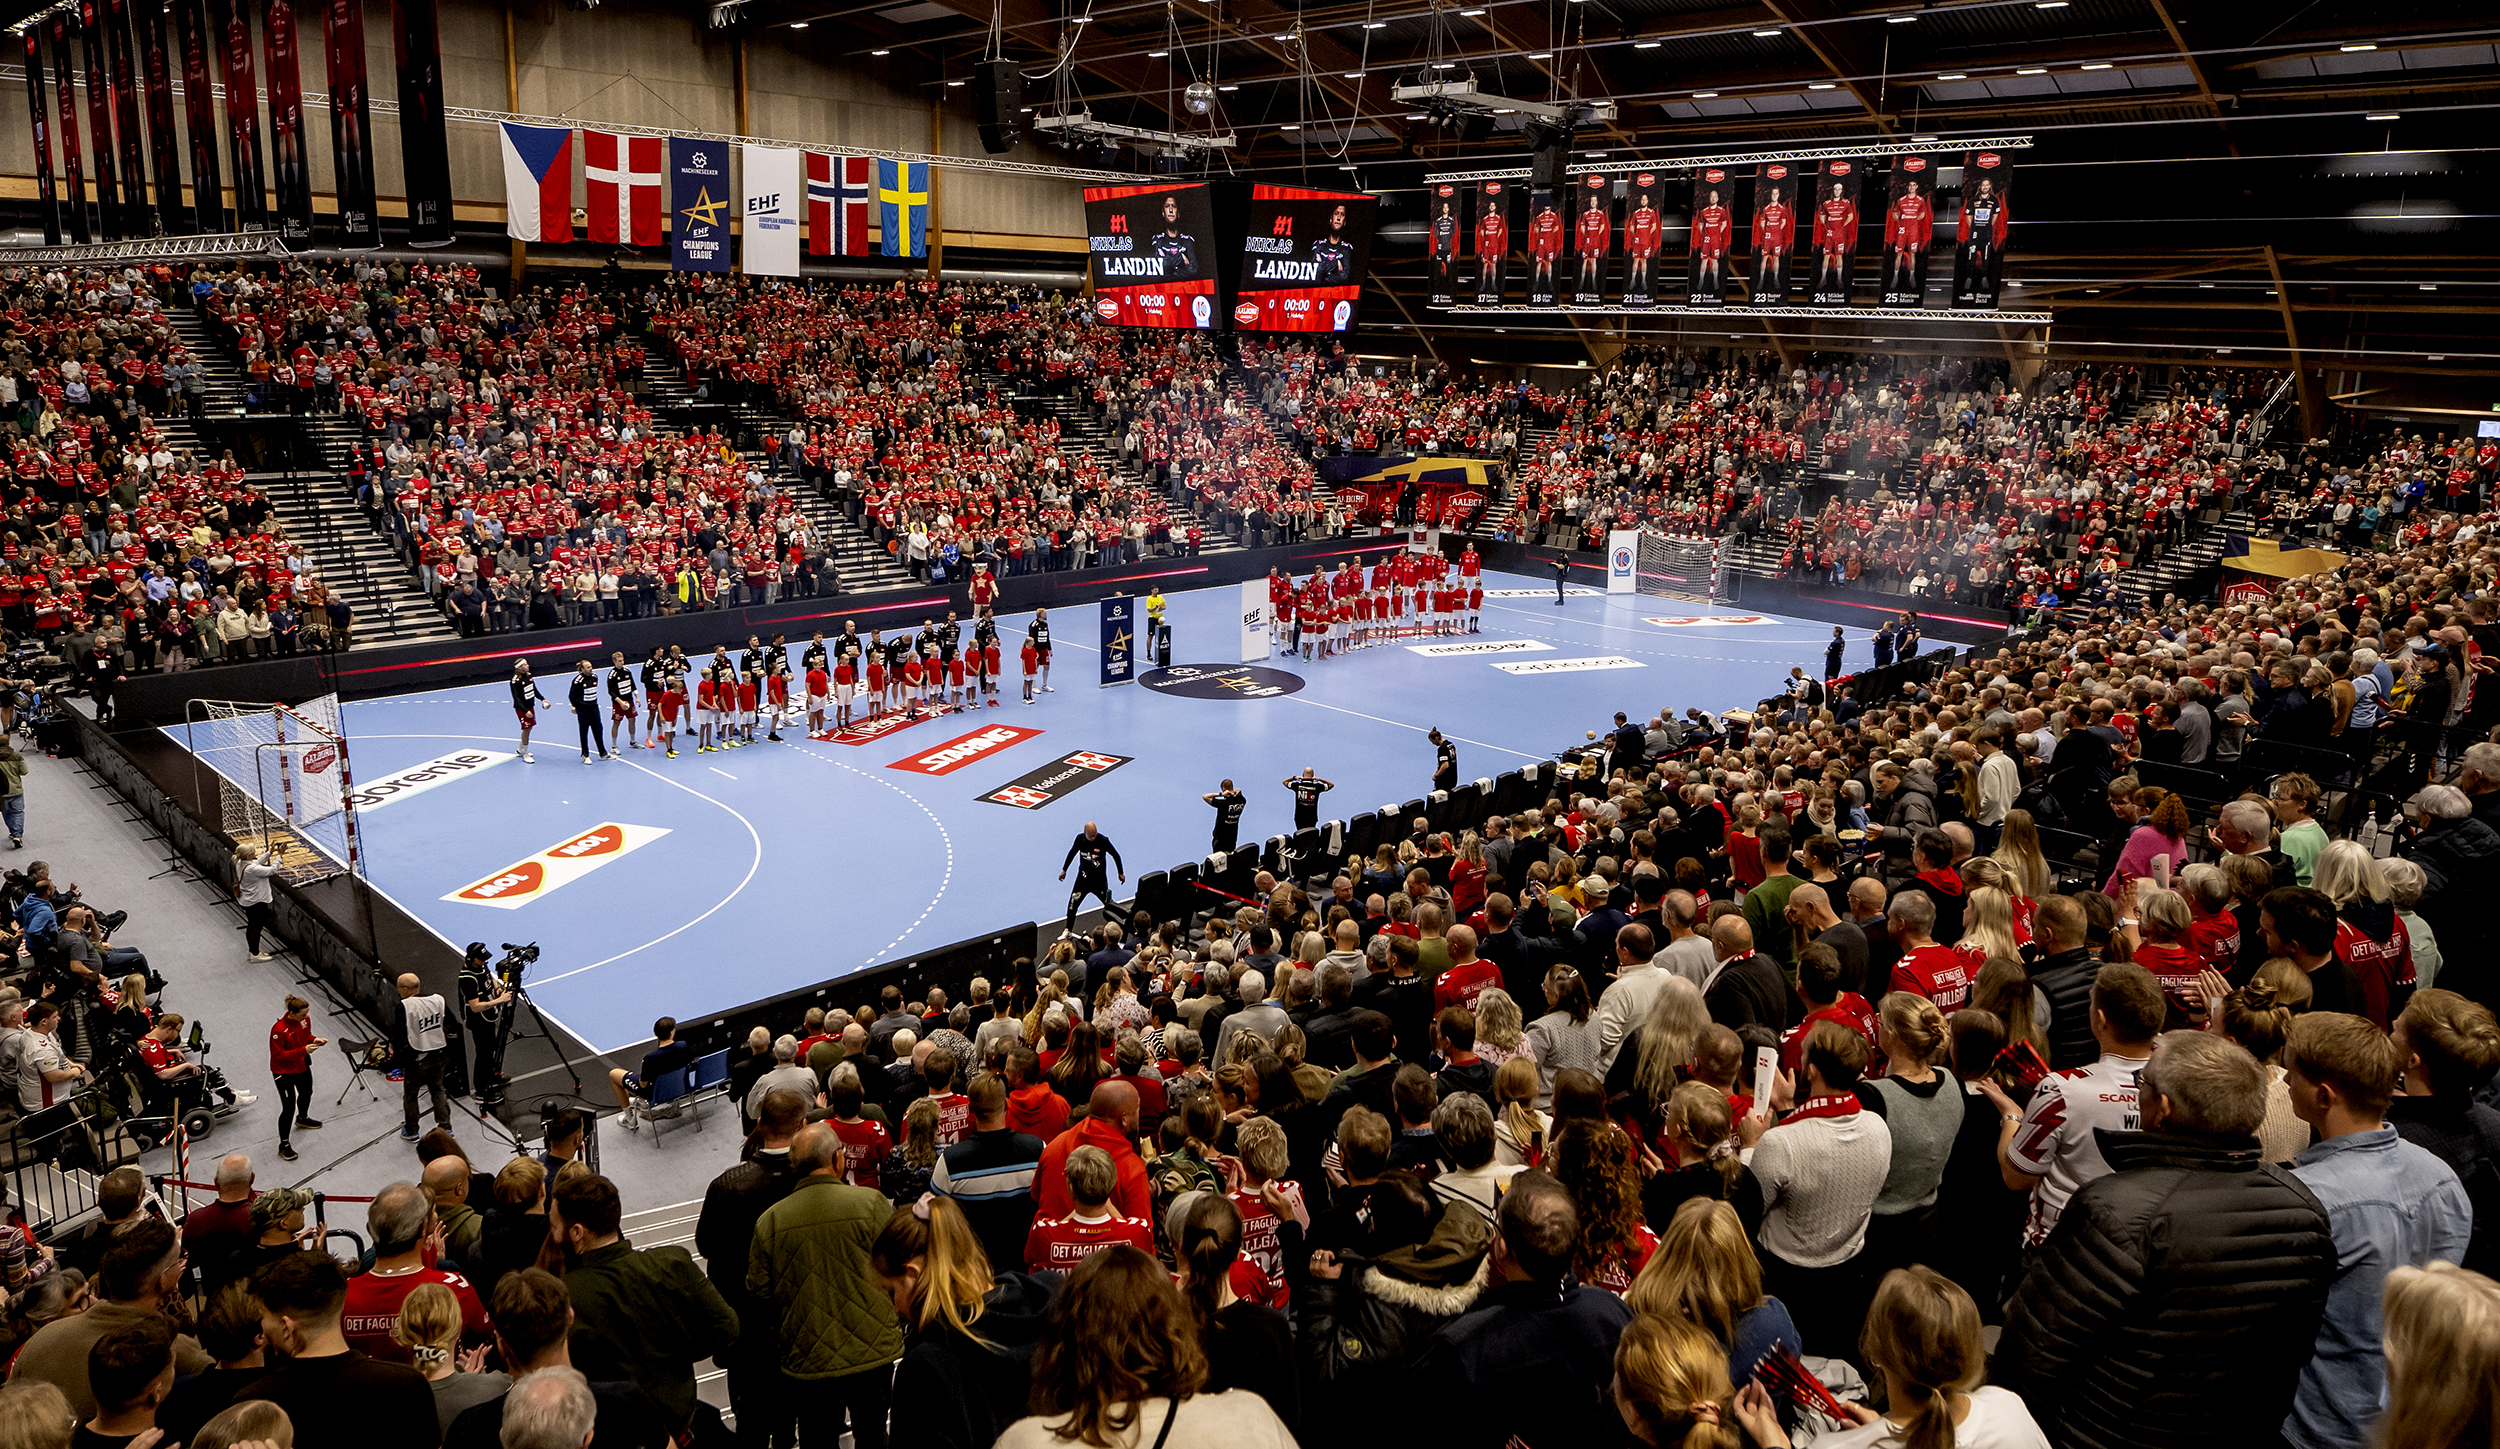 EHF Champions League håndbold i Aalborg.

Aalborg Håndbold - Kolstad Håndbold slut 27-25